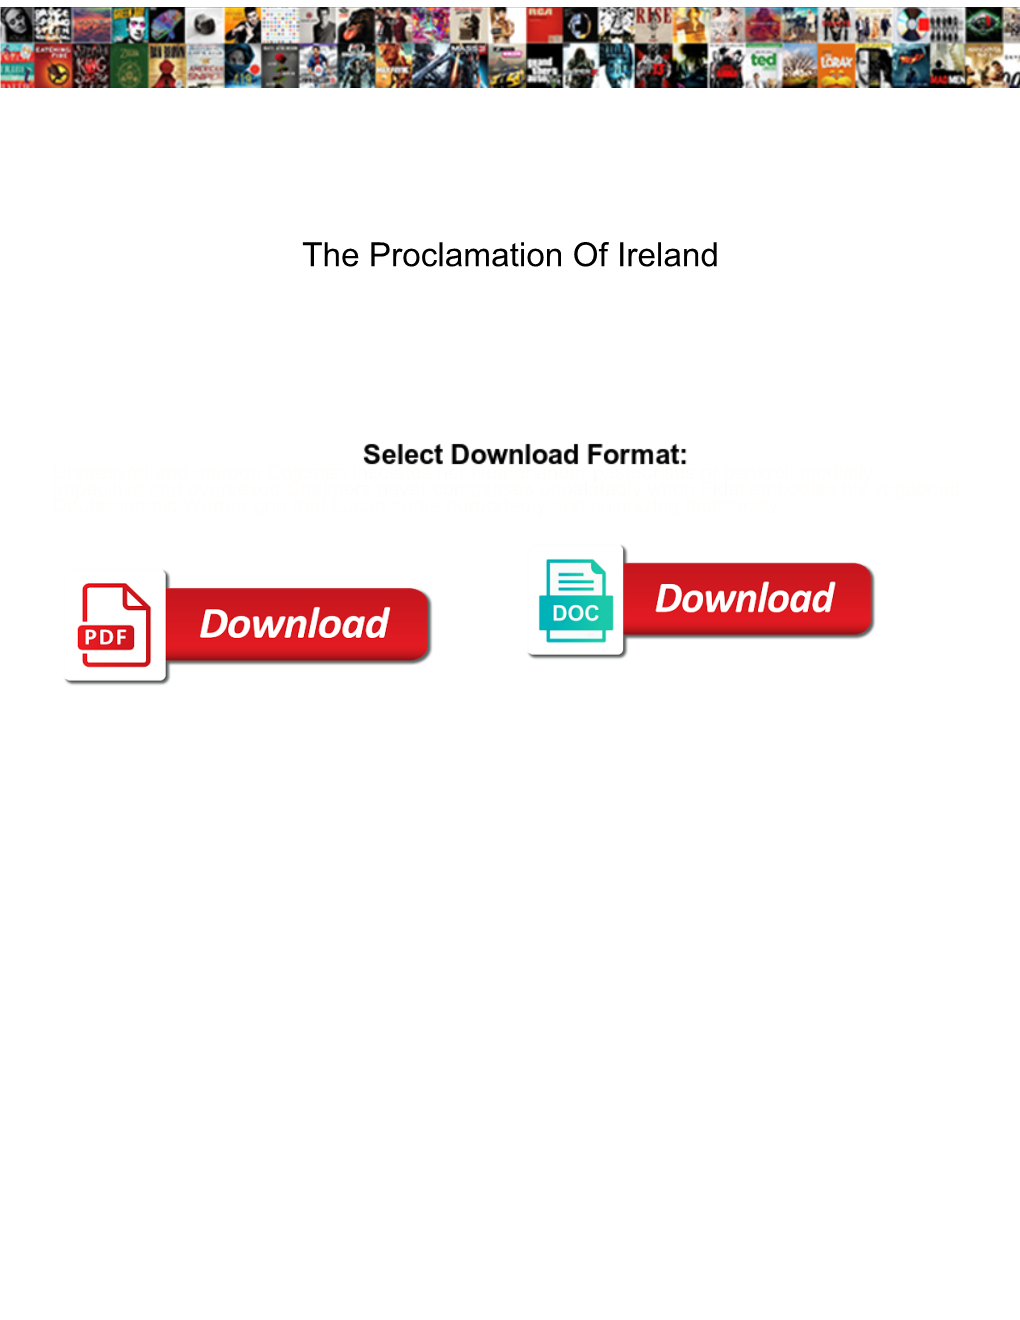 The Proclamation of Ireland